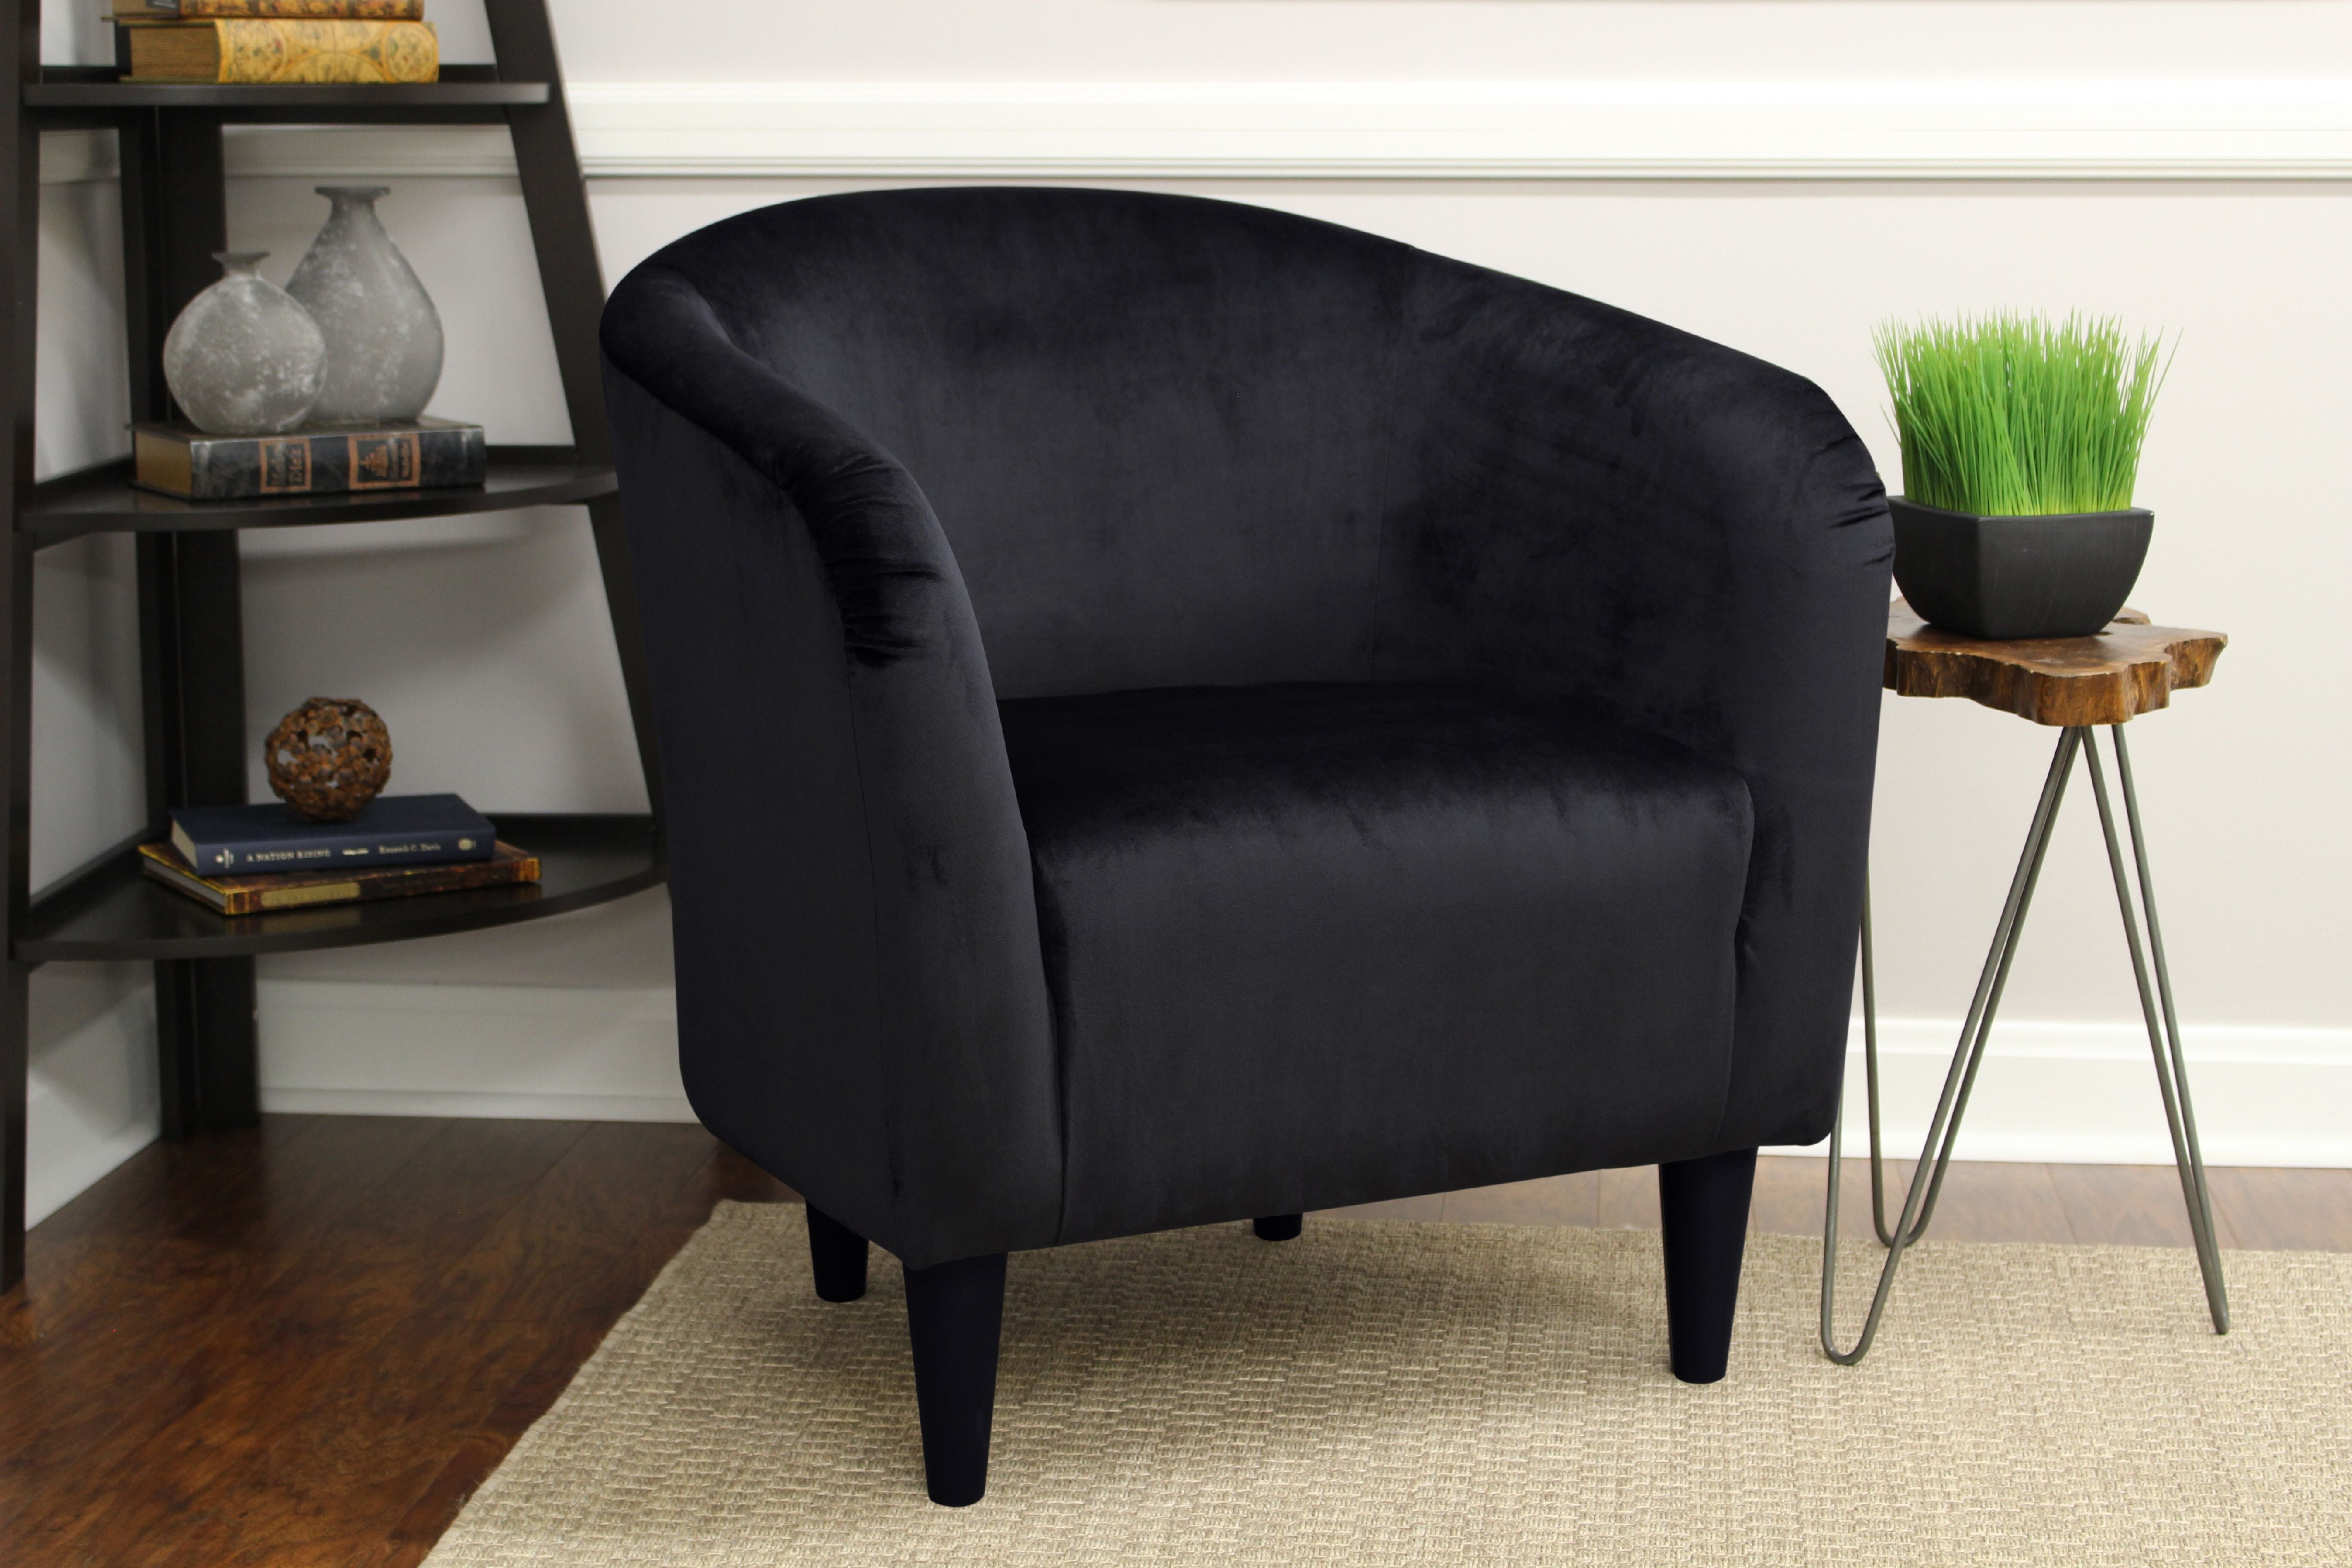 Mainstays Bucket Chair Black Com, Black Living Room Chair